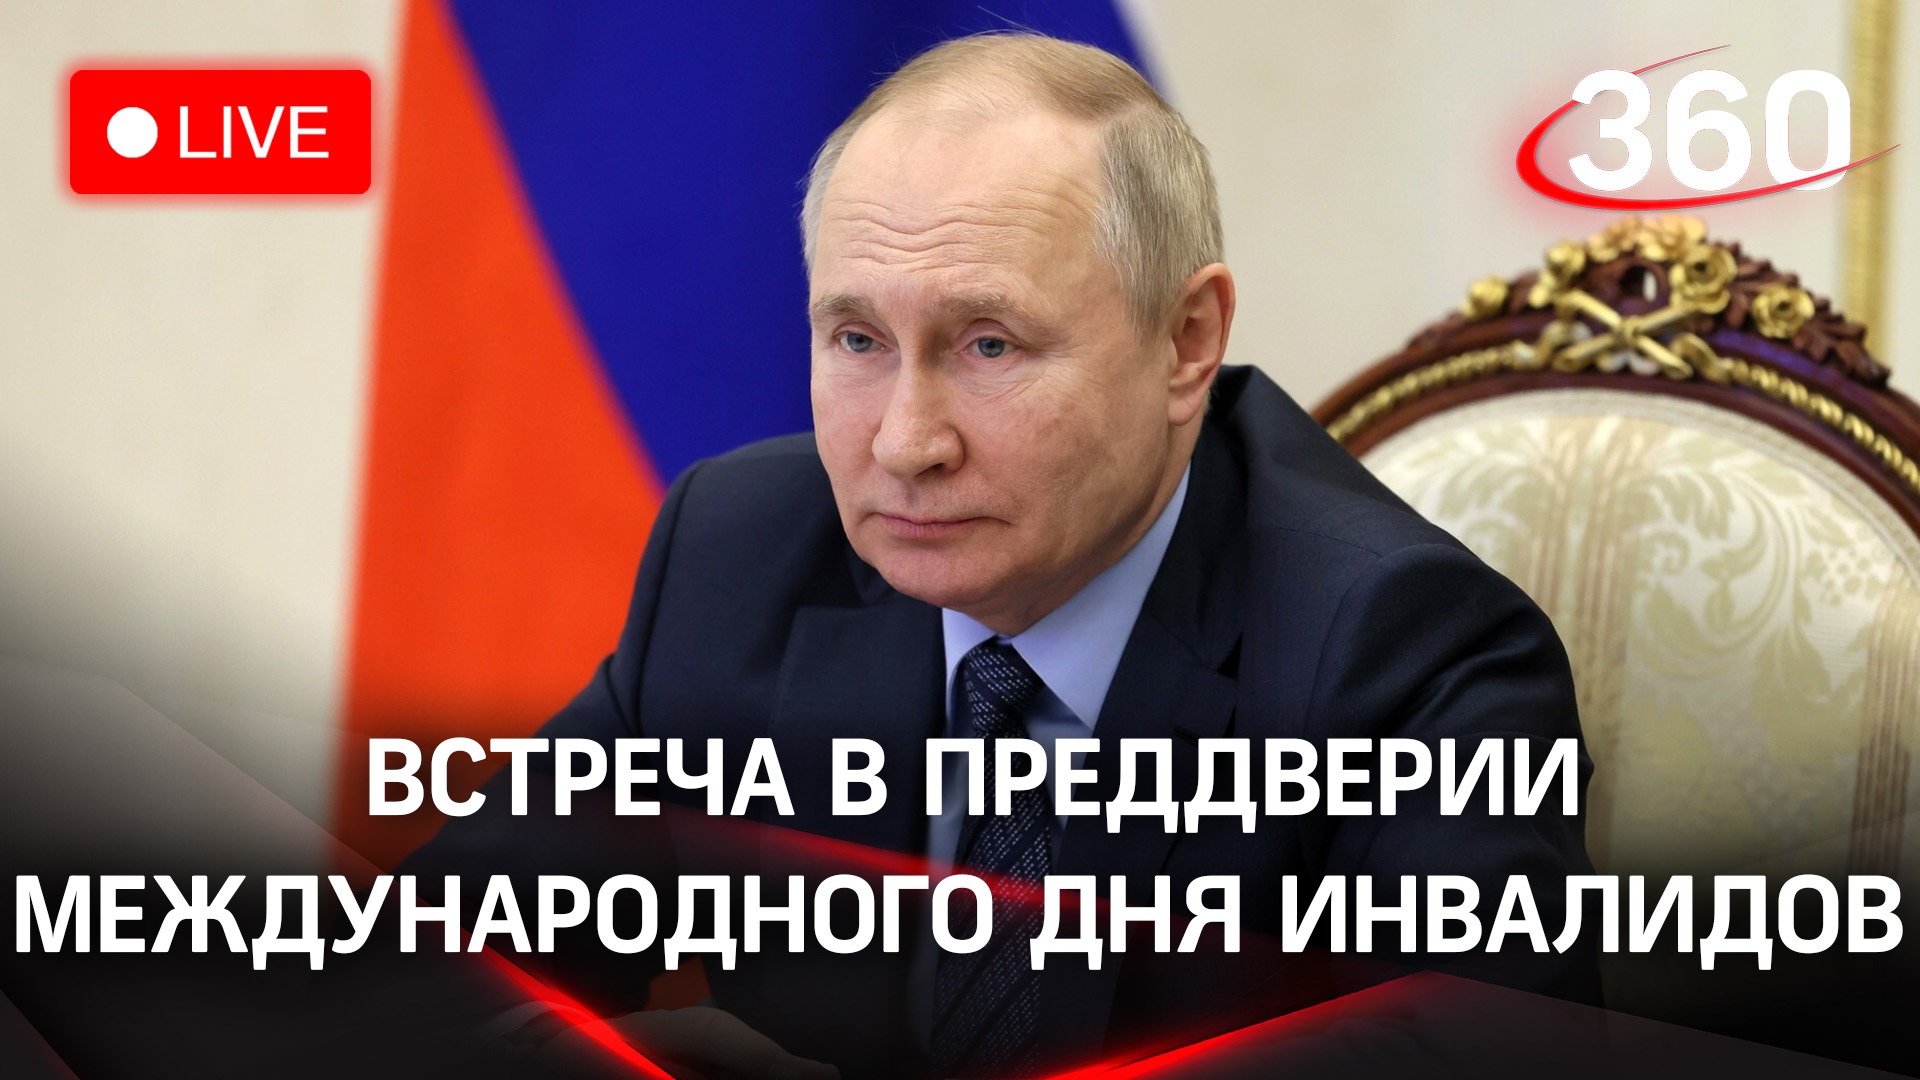 Владимир Путин: встреча в канун Международного дня инвалидов